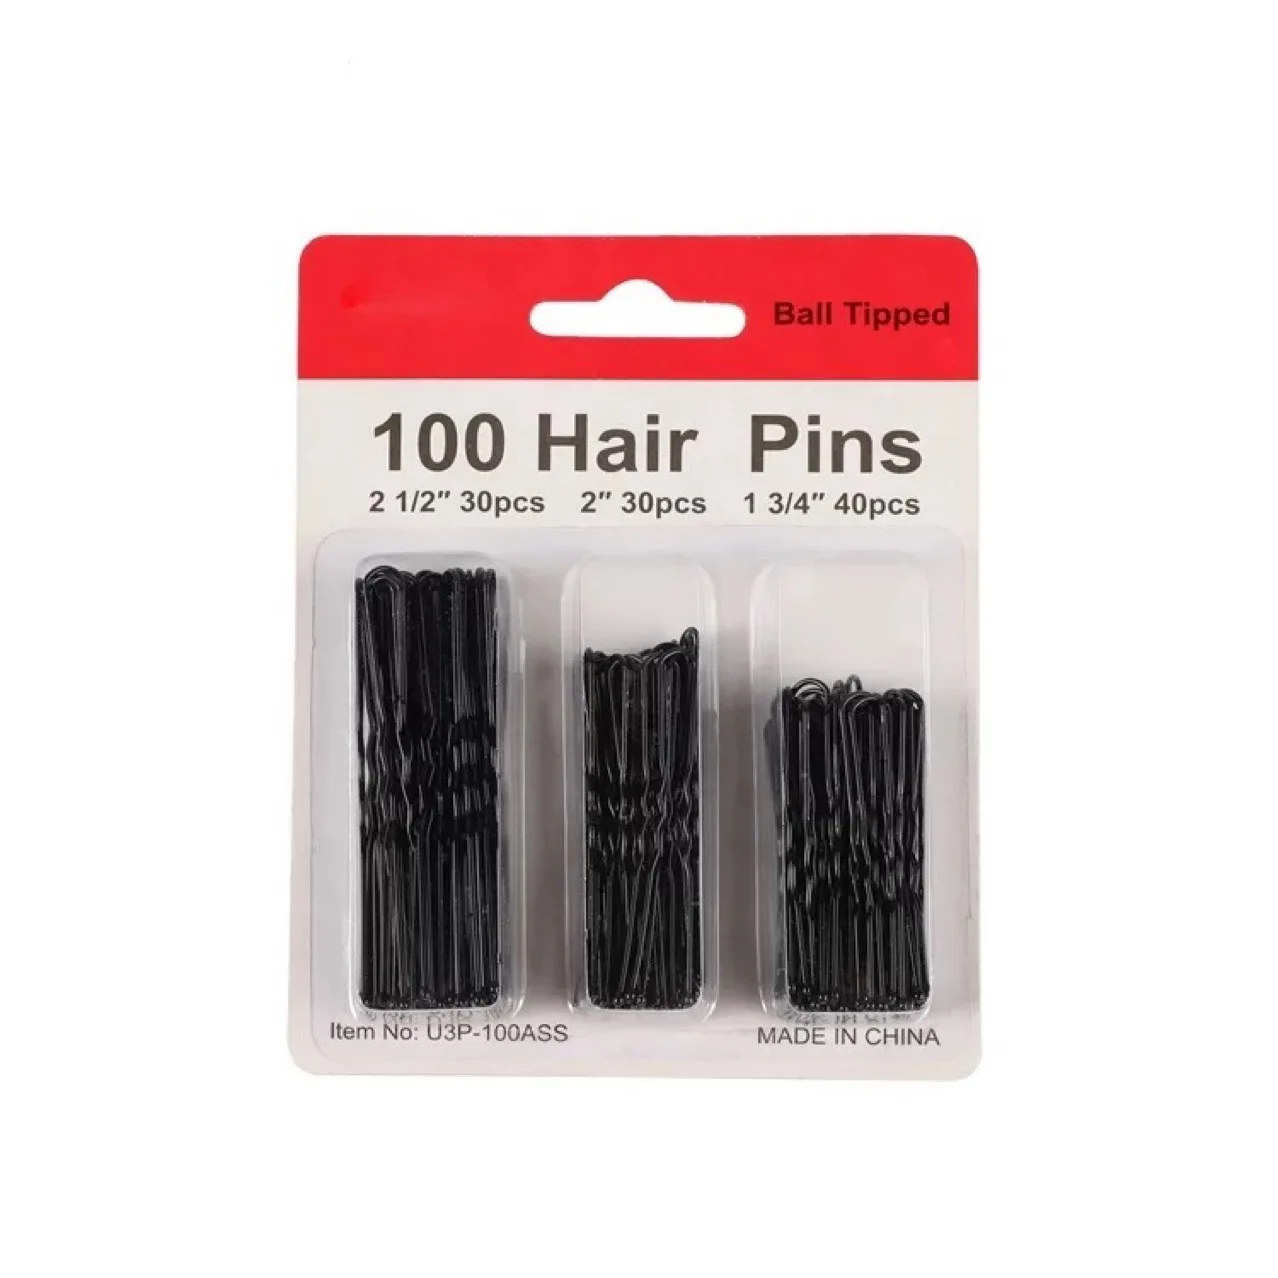 Pins Black pins Hair pins Black hair pins 3 packs Black color.